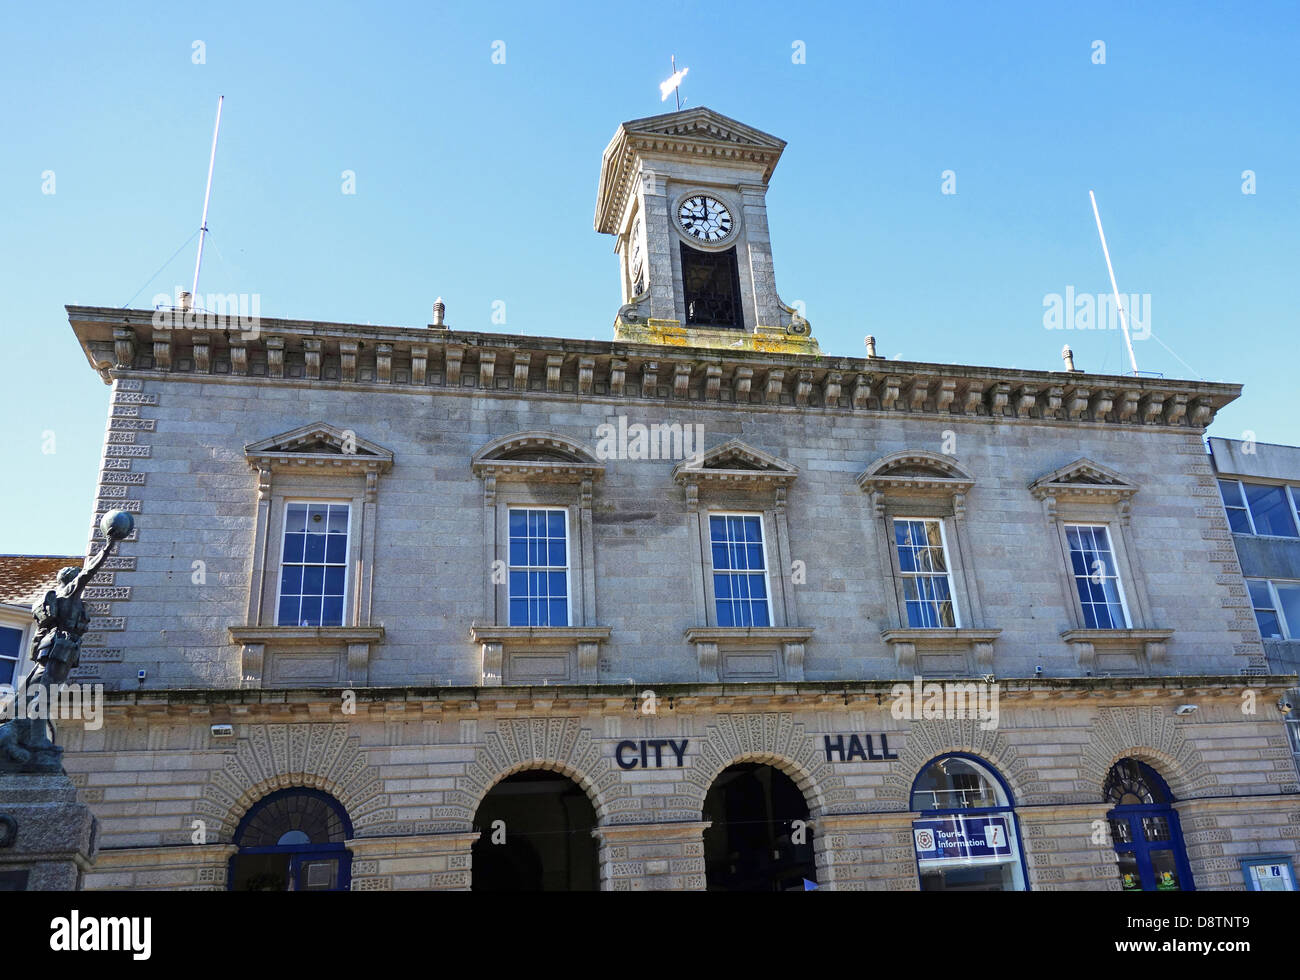 City Hall in Truro, Cornwall, Uk Stock Photo